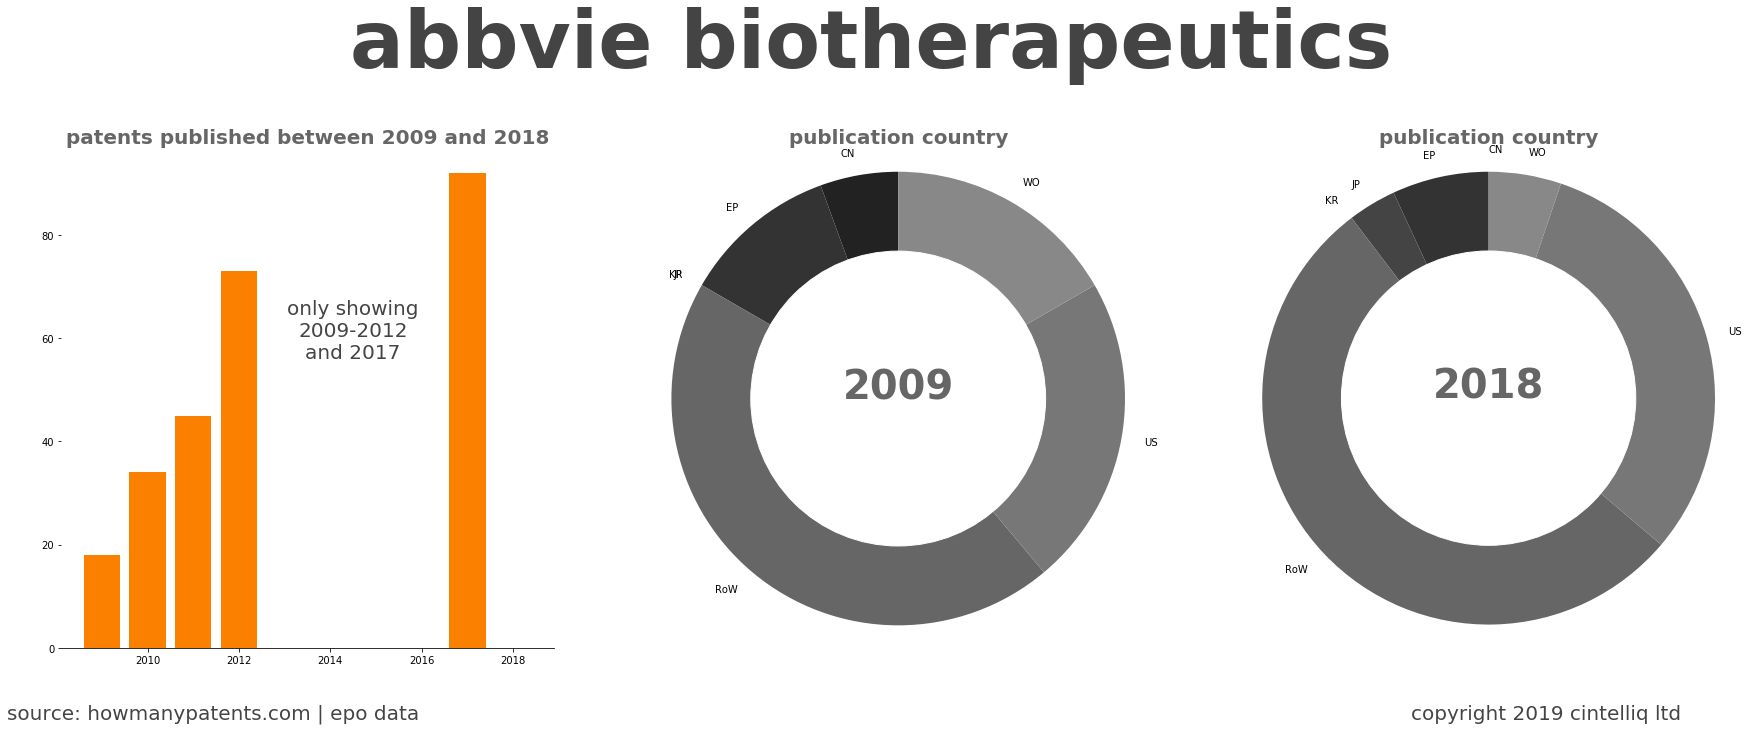 summary of patents for Abbvie Biotherapeutics